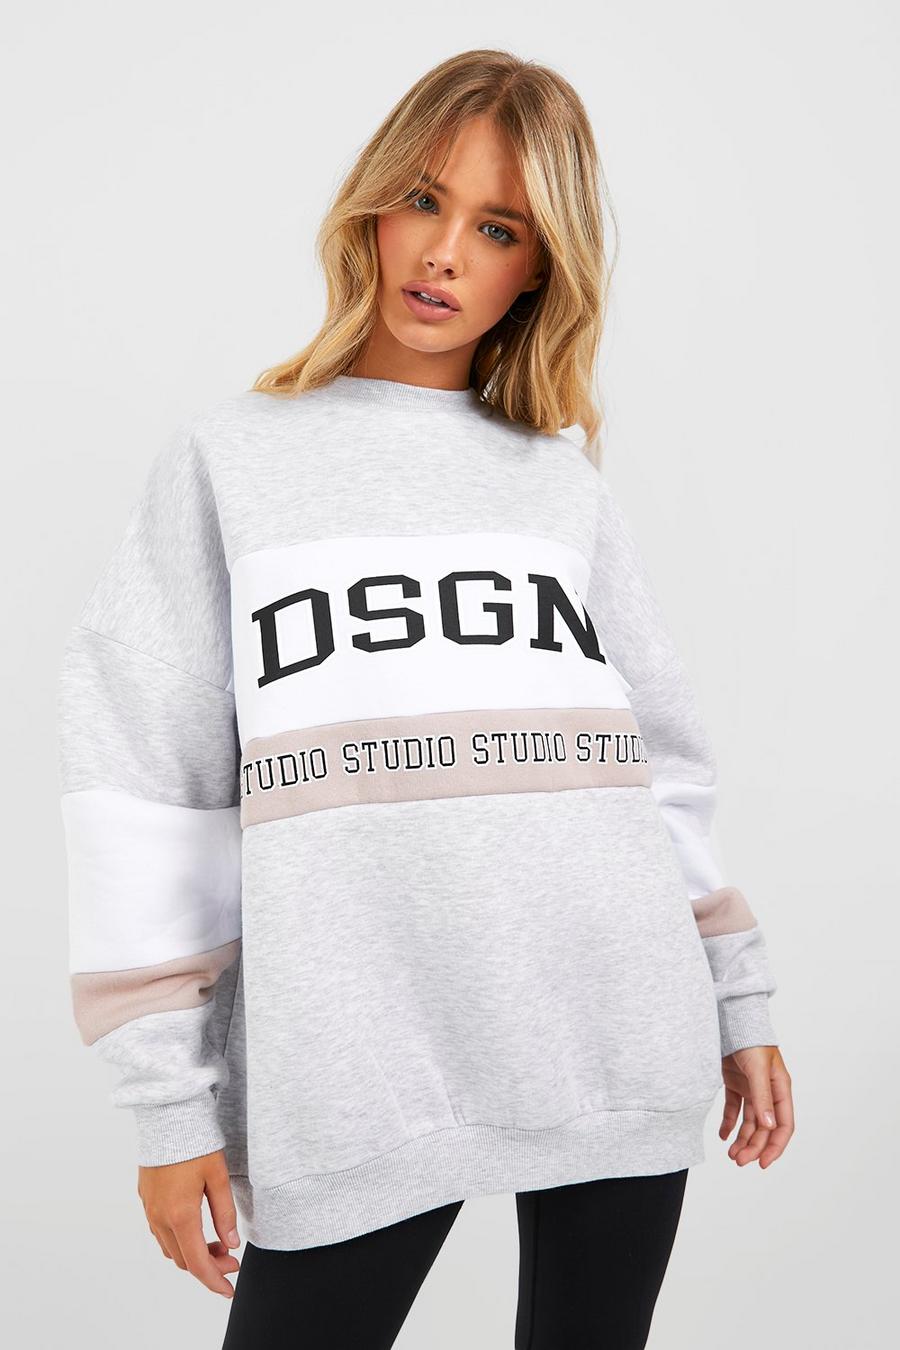 Colorblock Sweatshirt mit Dsgn Studio Print, Ash grey